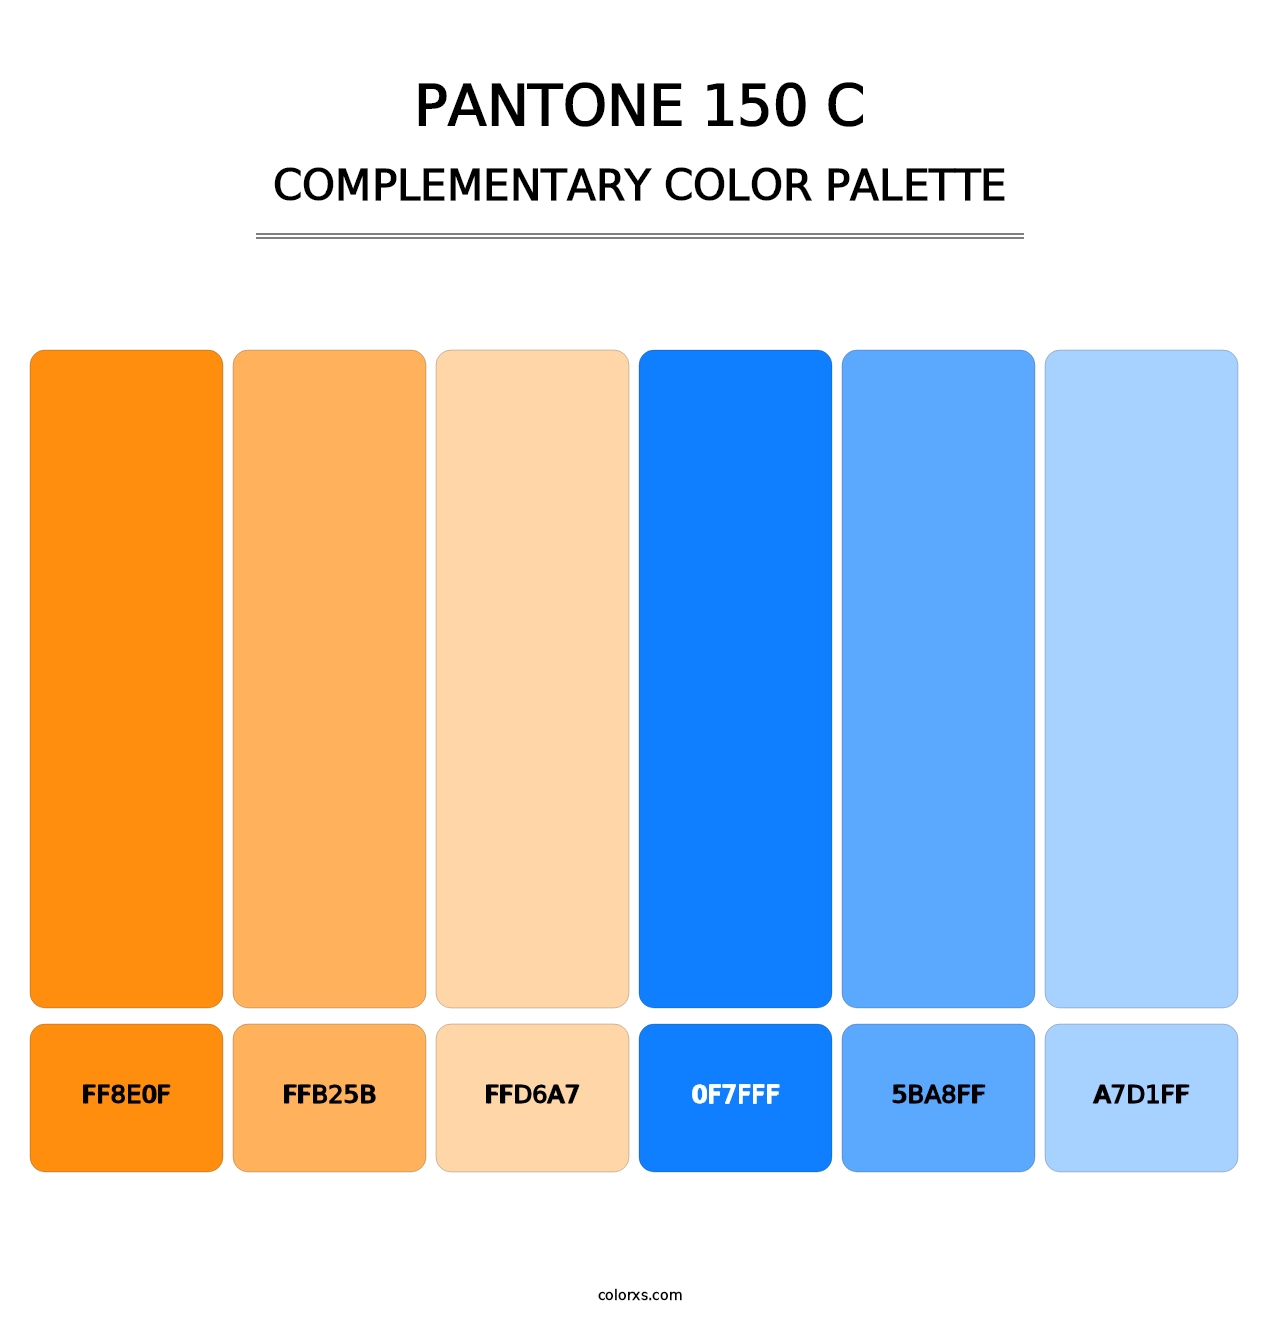 PANTONE 150 C - Complementary Color Palette